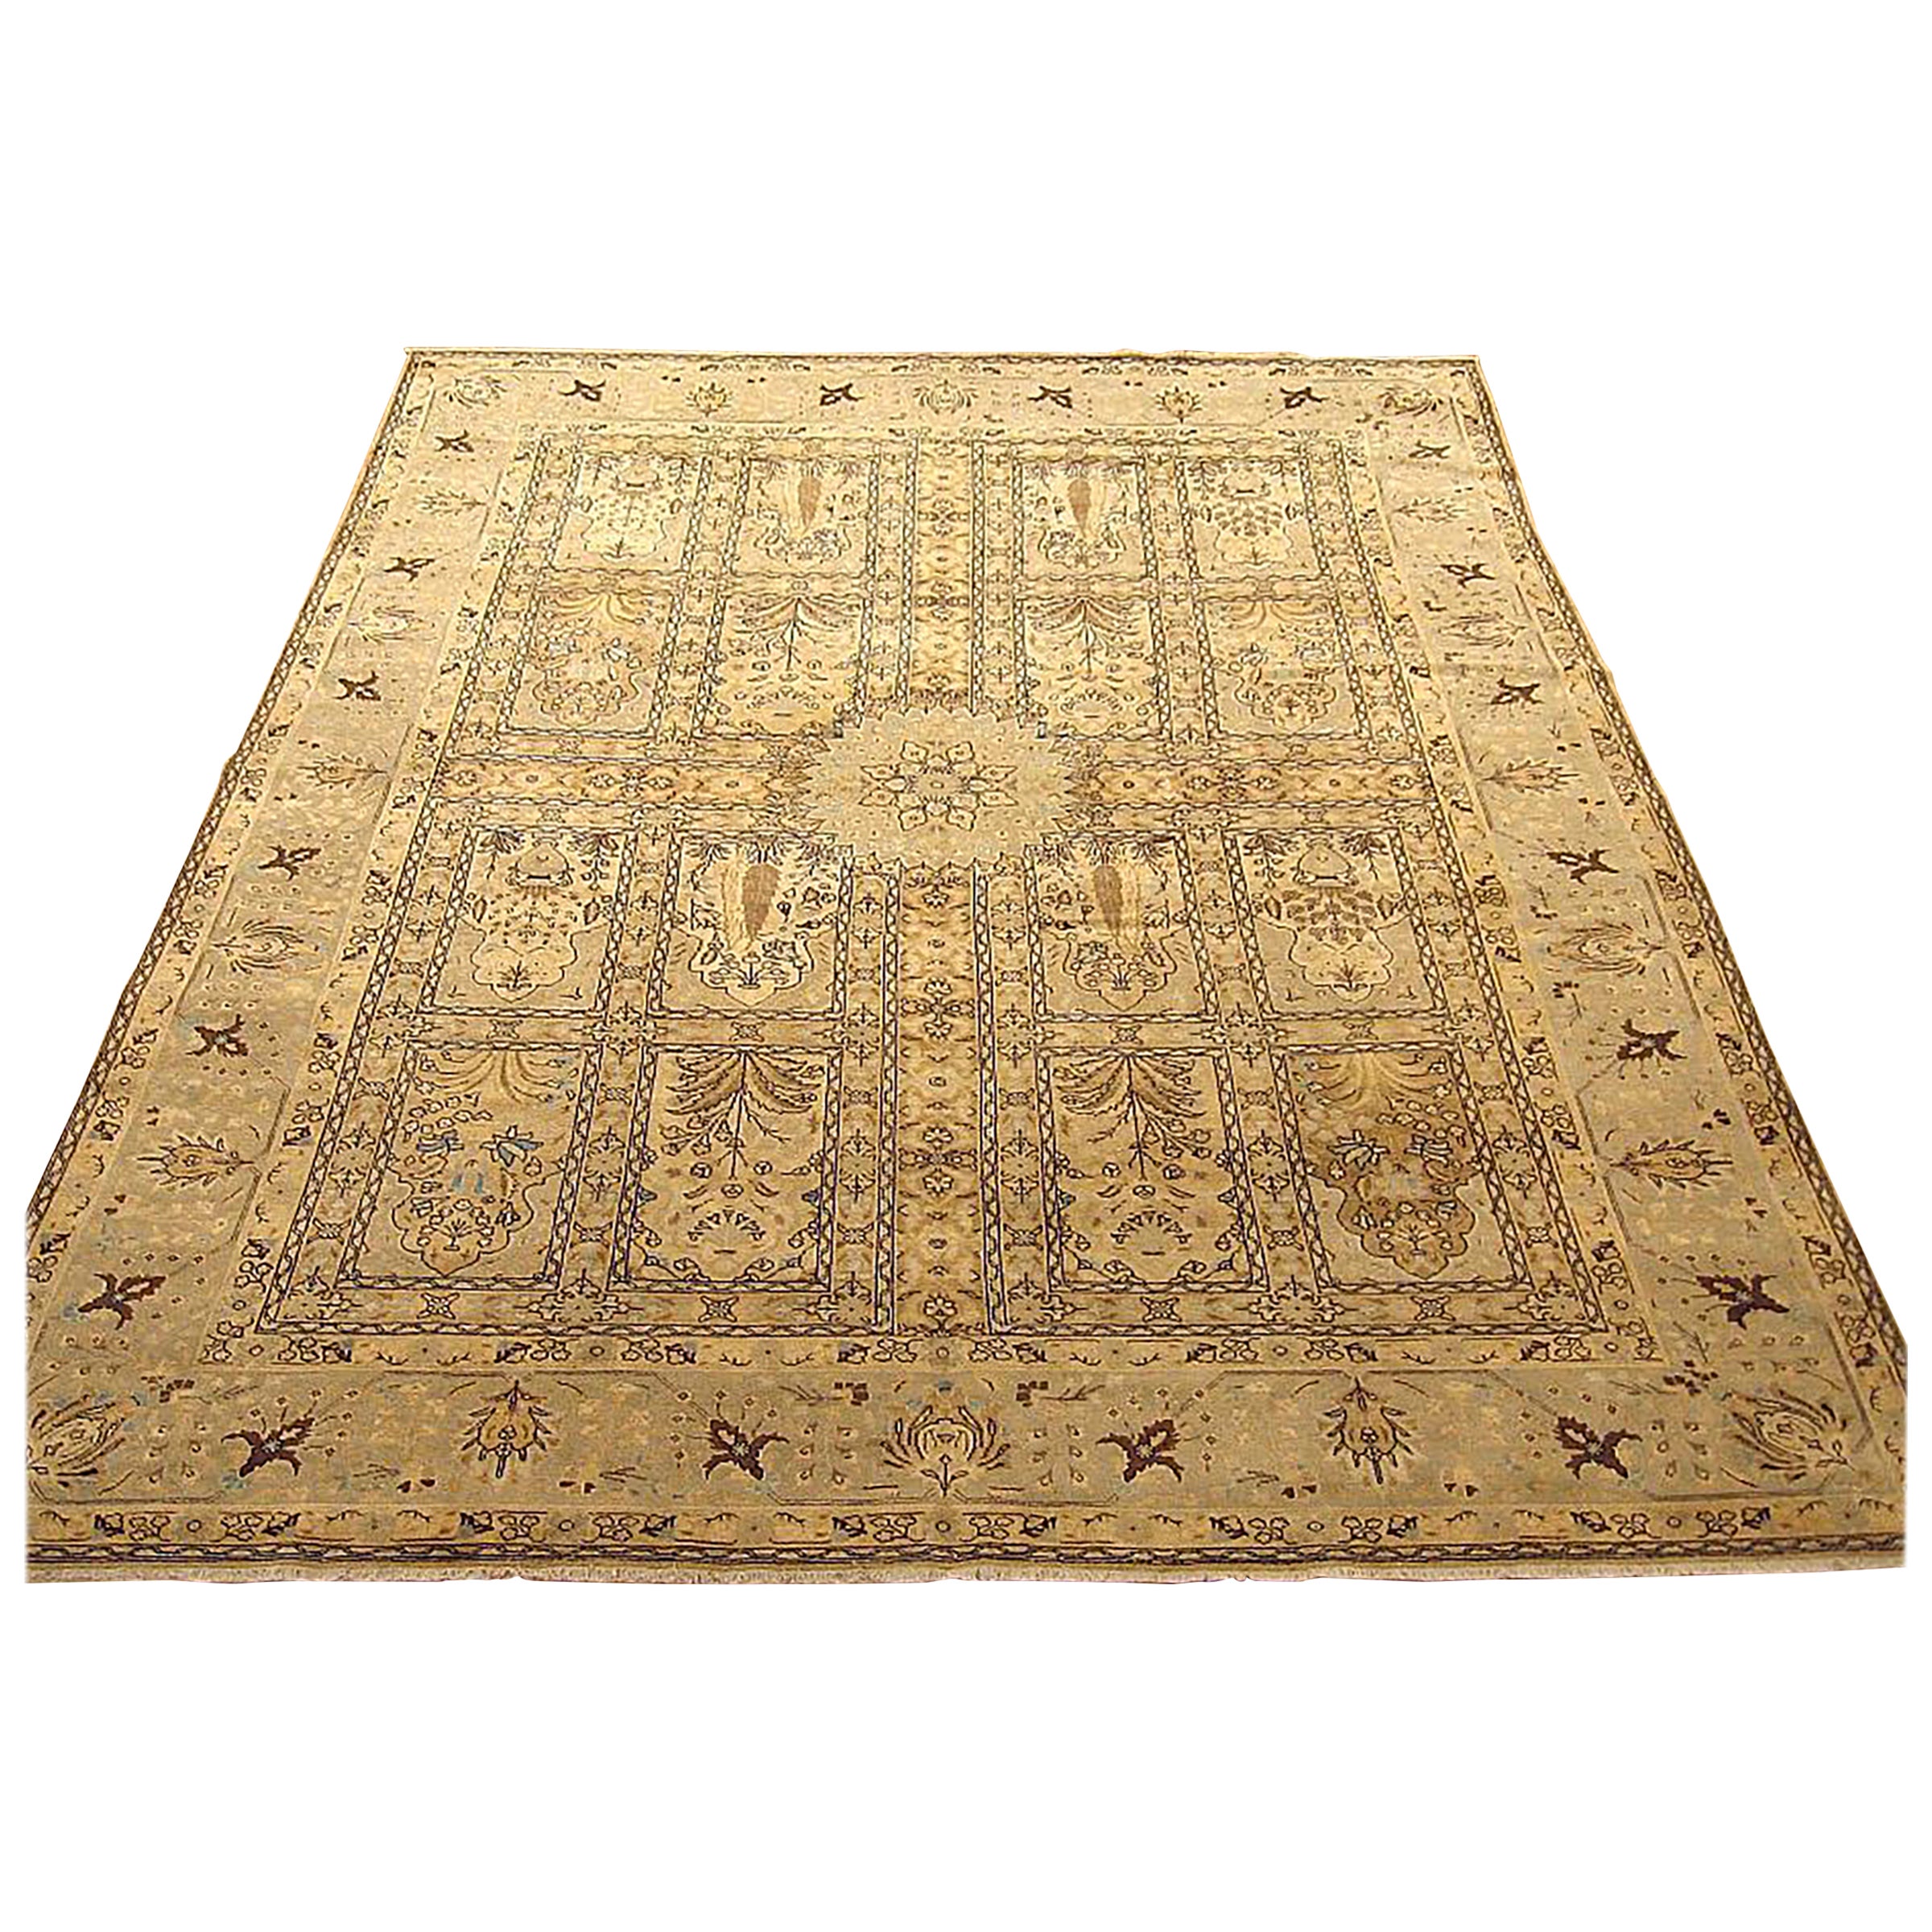 Antique Persian Tabriz Oriental Carpet in Room Size with Garden Design For Sale